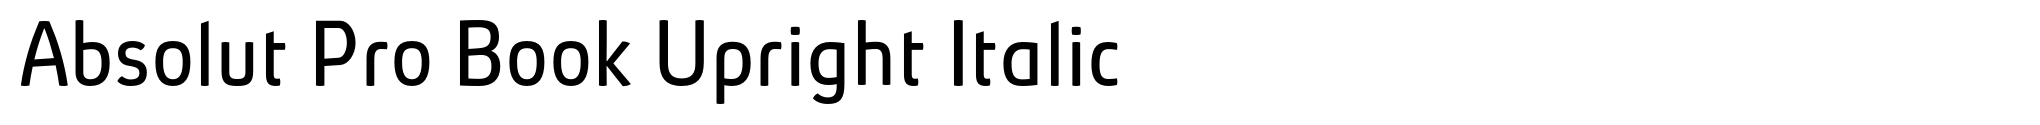 Absolut Pro Book Upright Italic image